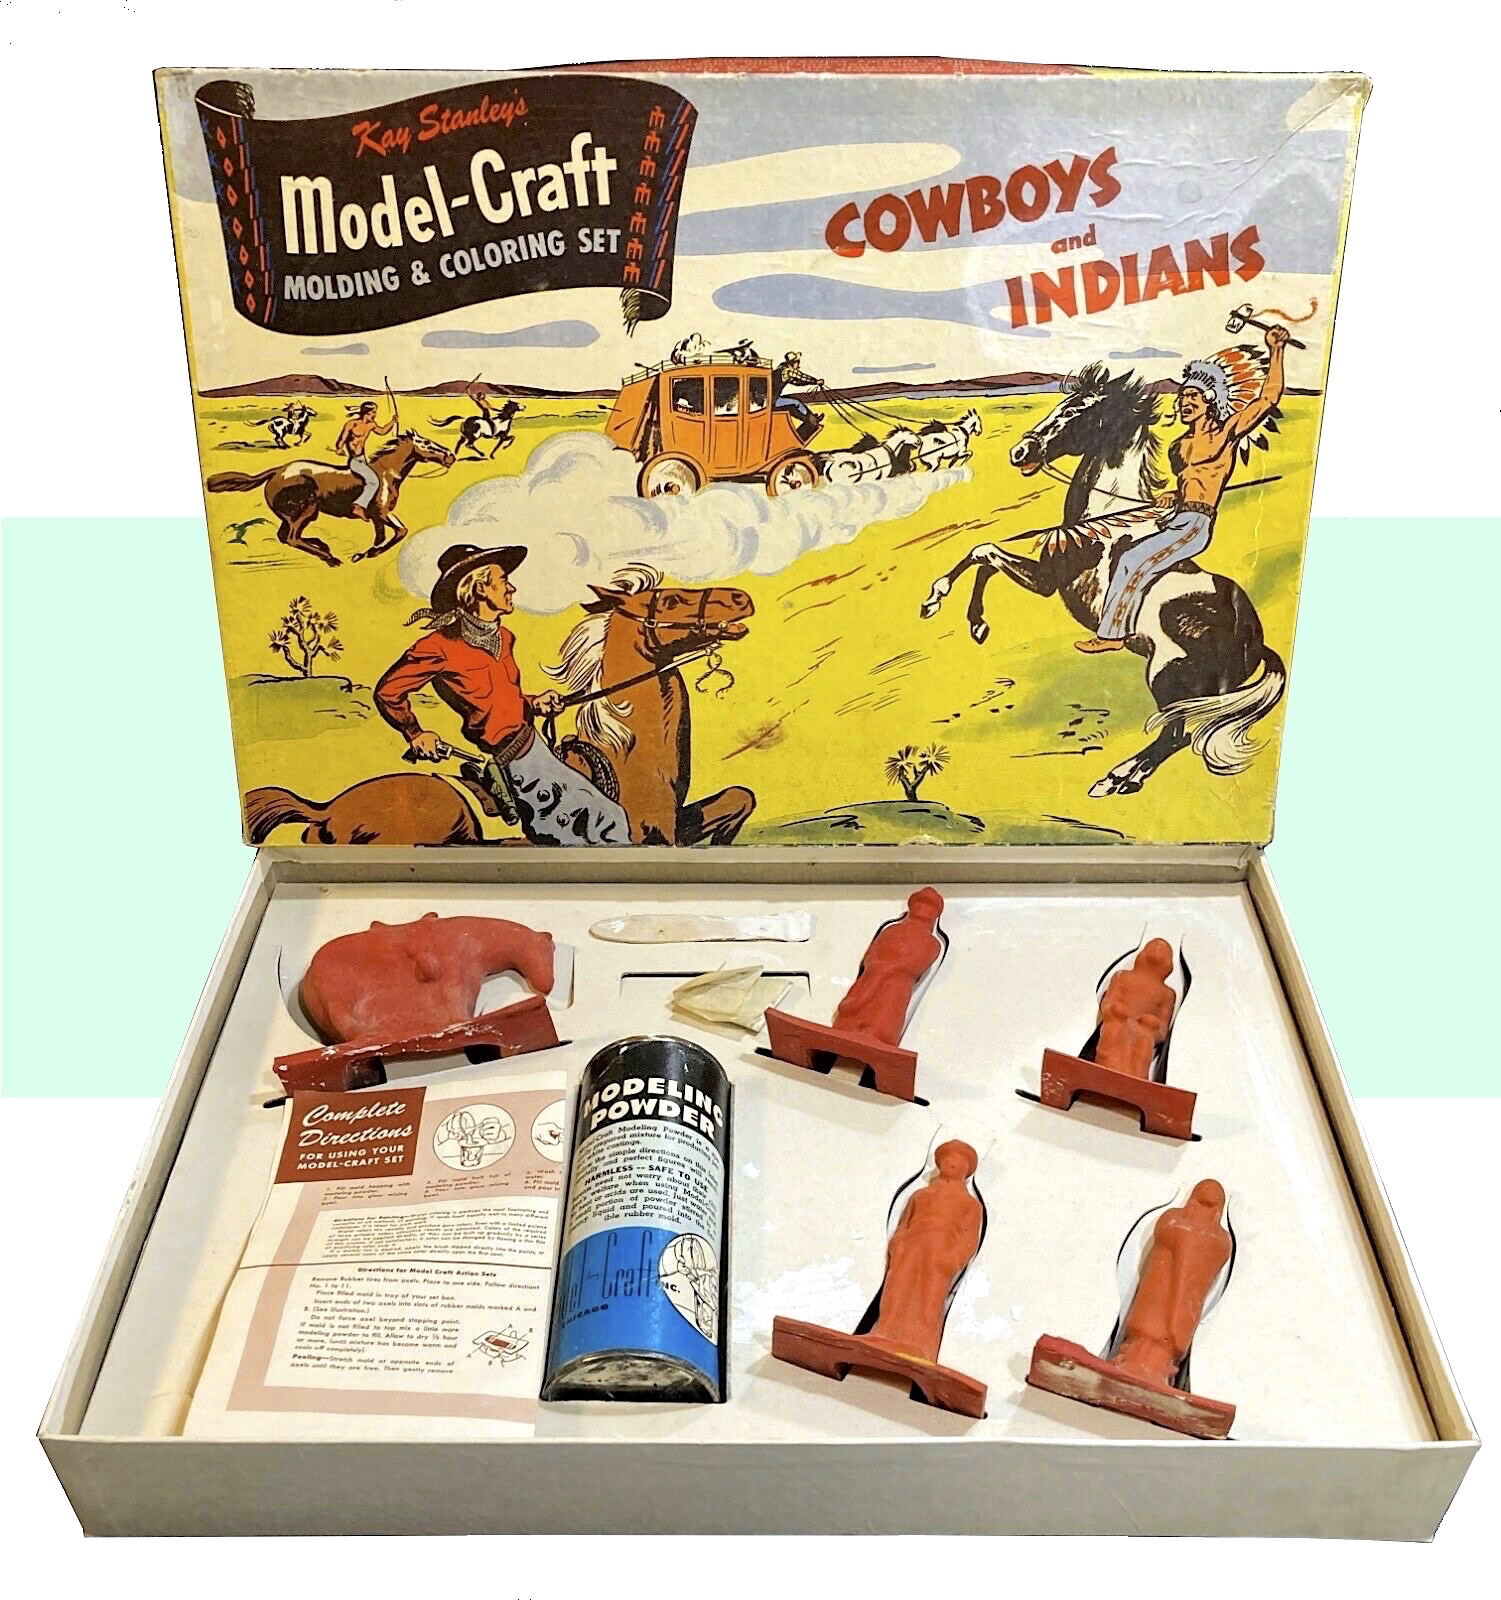 Model-Craft, Inc., est. 1942